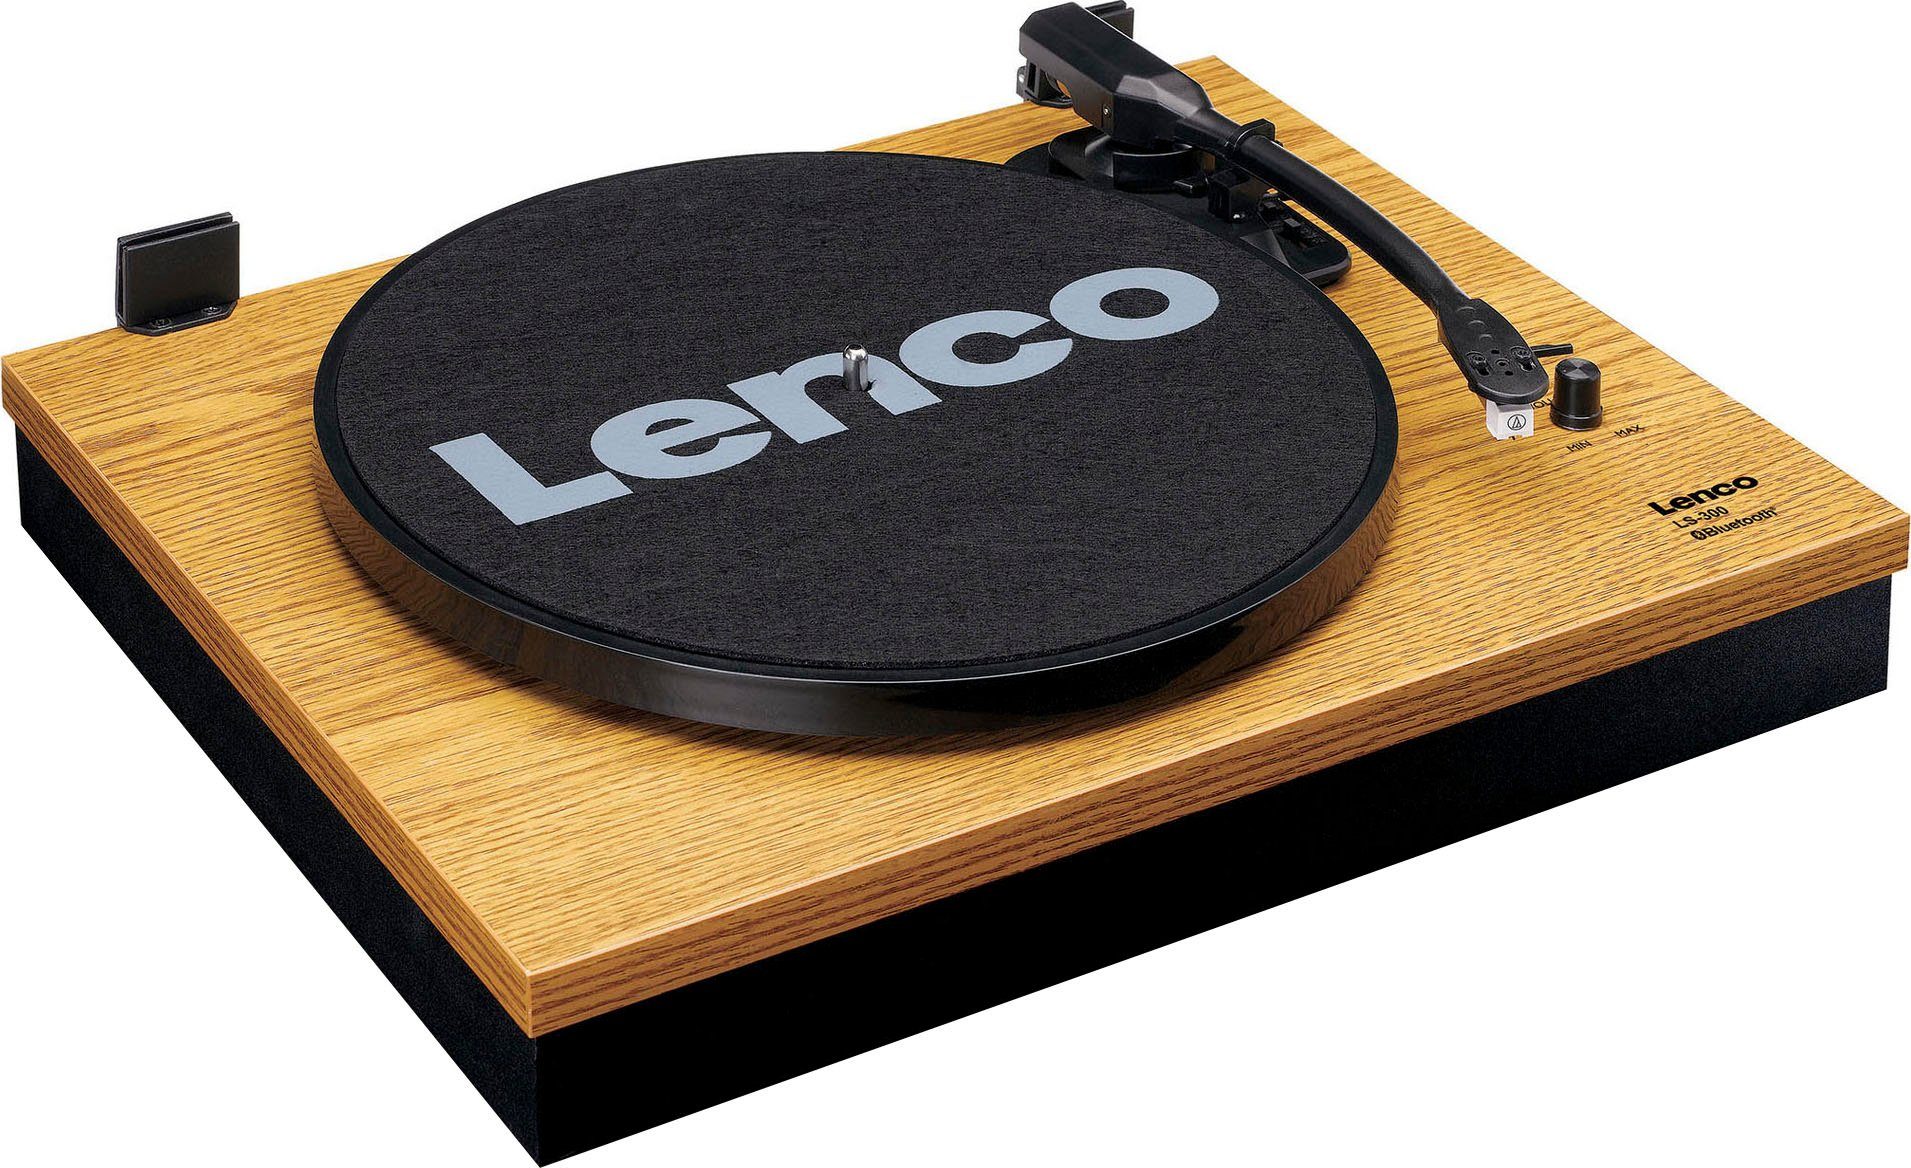 Plattenspieler ext. Holz Lautsprechern LS-300WD (Riemenantrieb) Plattenspieler mit Lenco